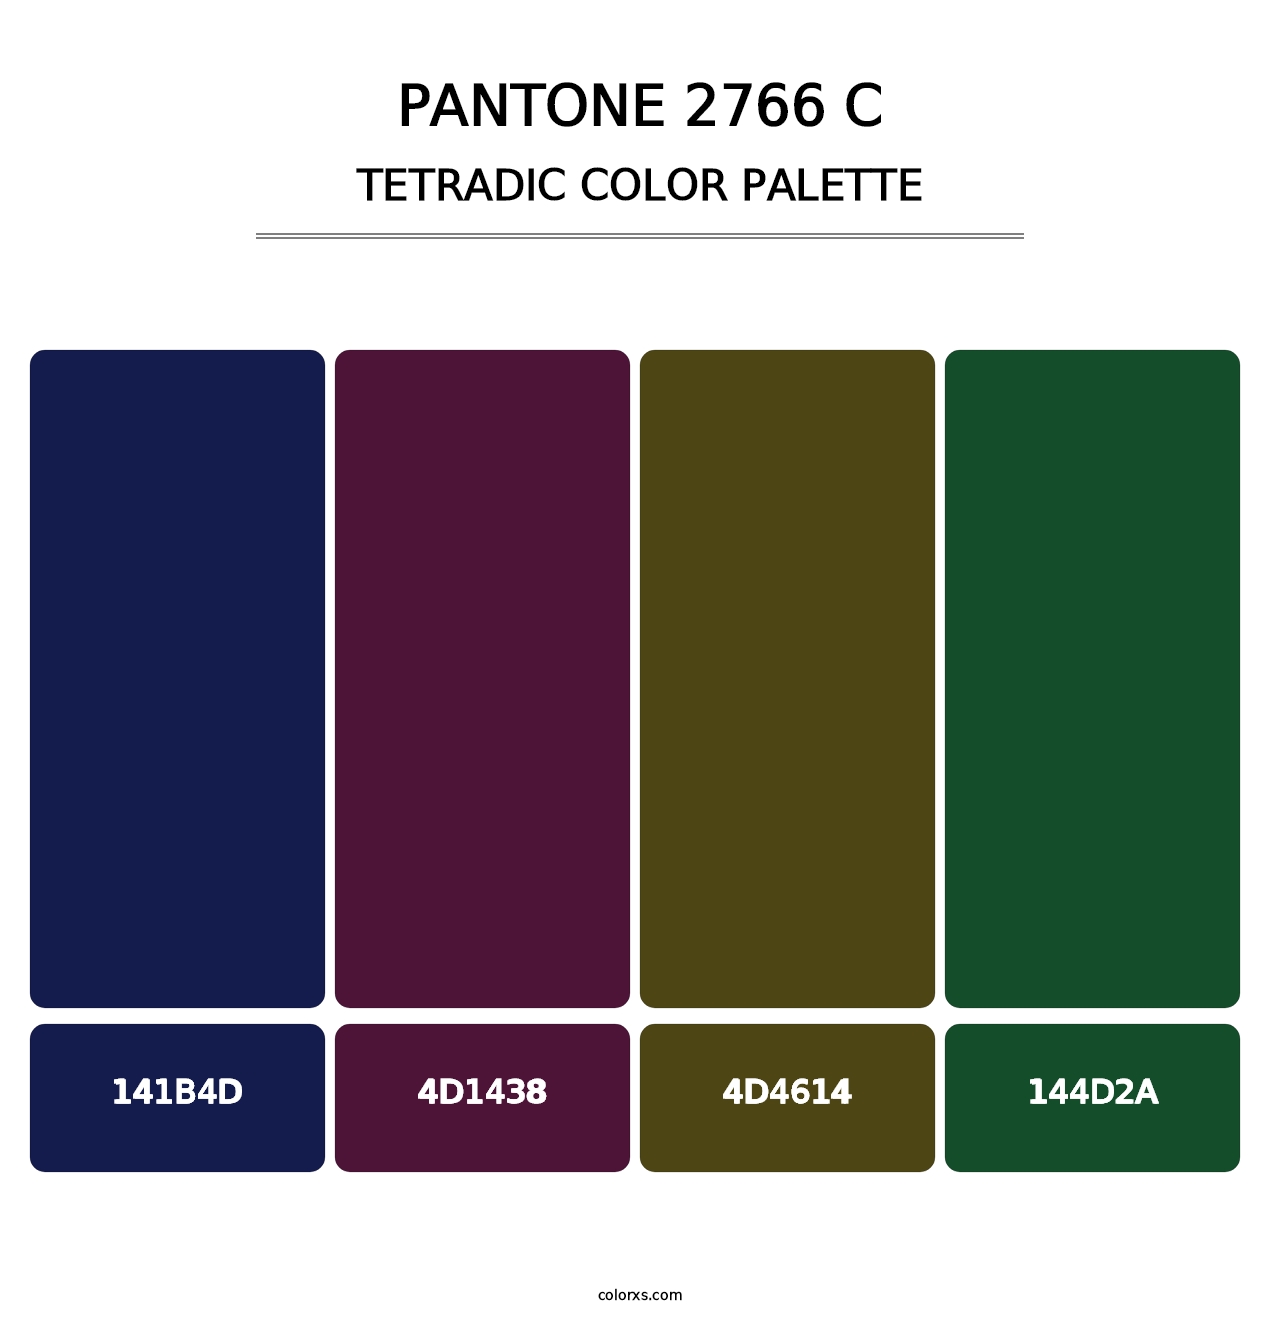 PANTONE 2766 C - Tetradic Color Palette